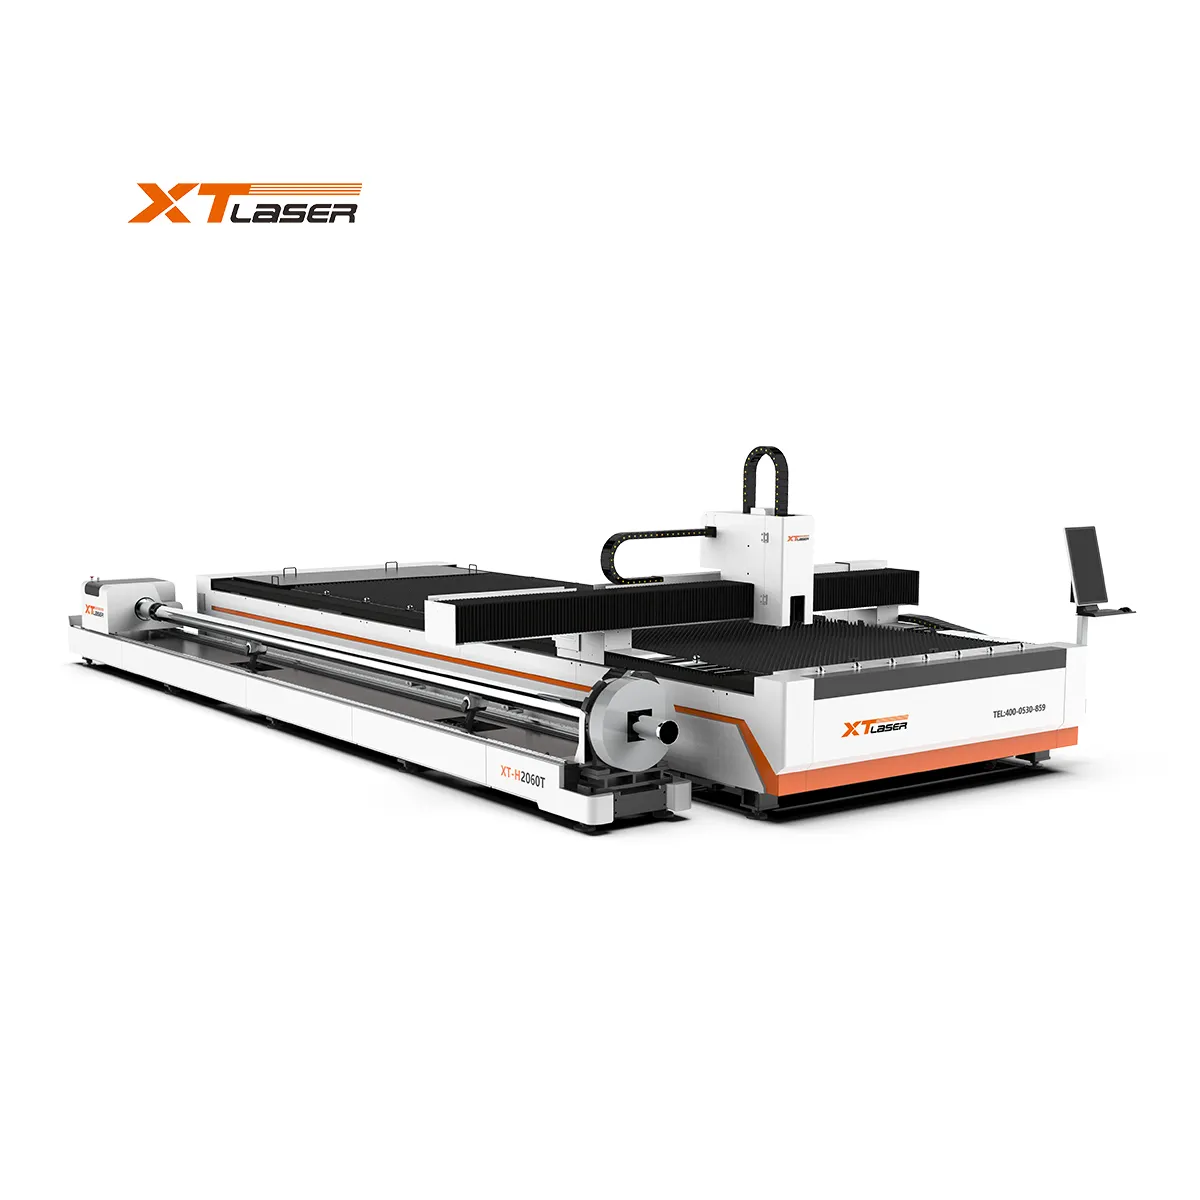 1530 Fiber Optic Equipment / Cnc Laser Cutter / Carbon steel Metal sheet Fiber Laser Cutting Machine With Rotary